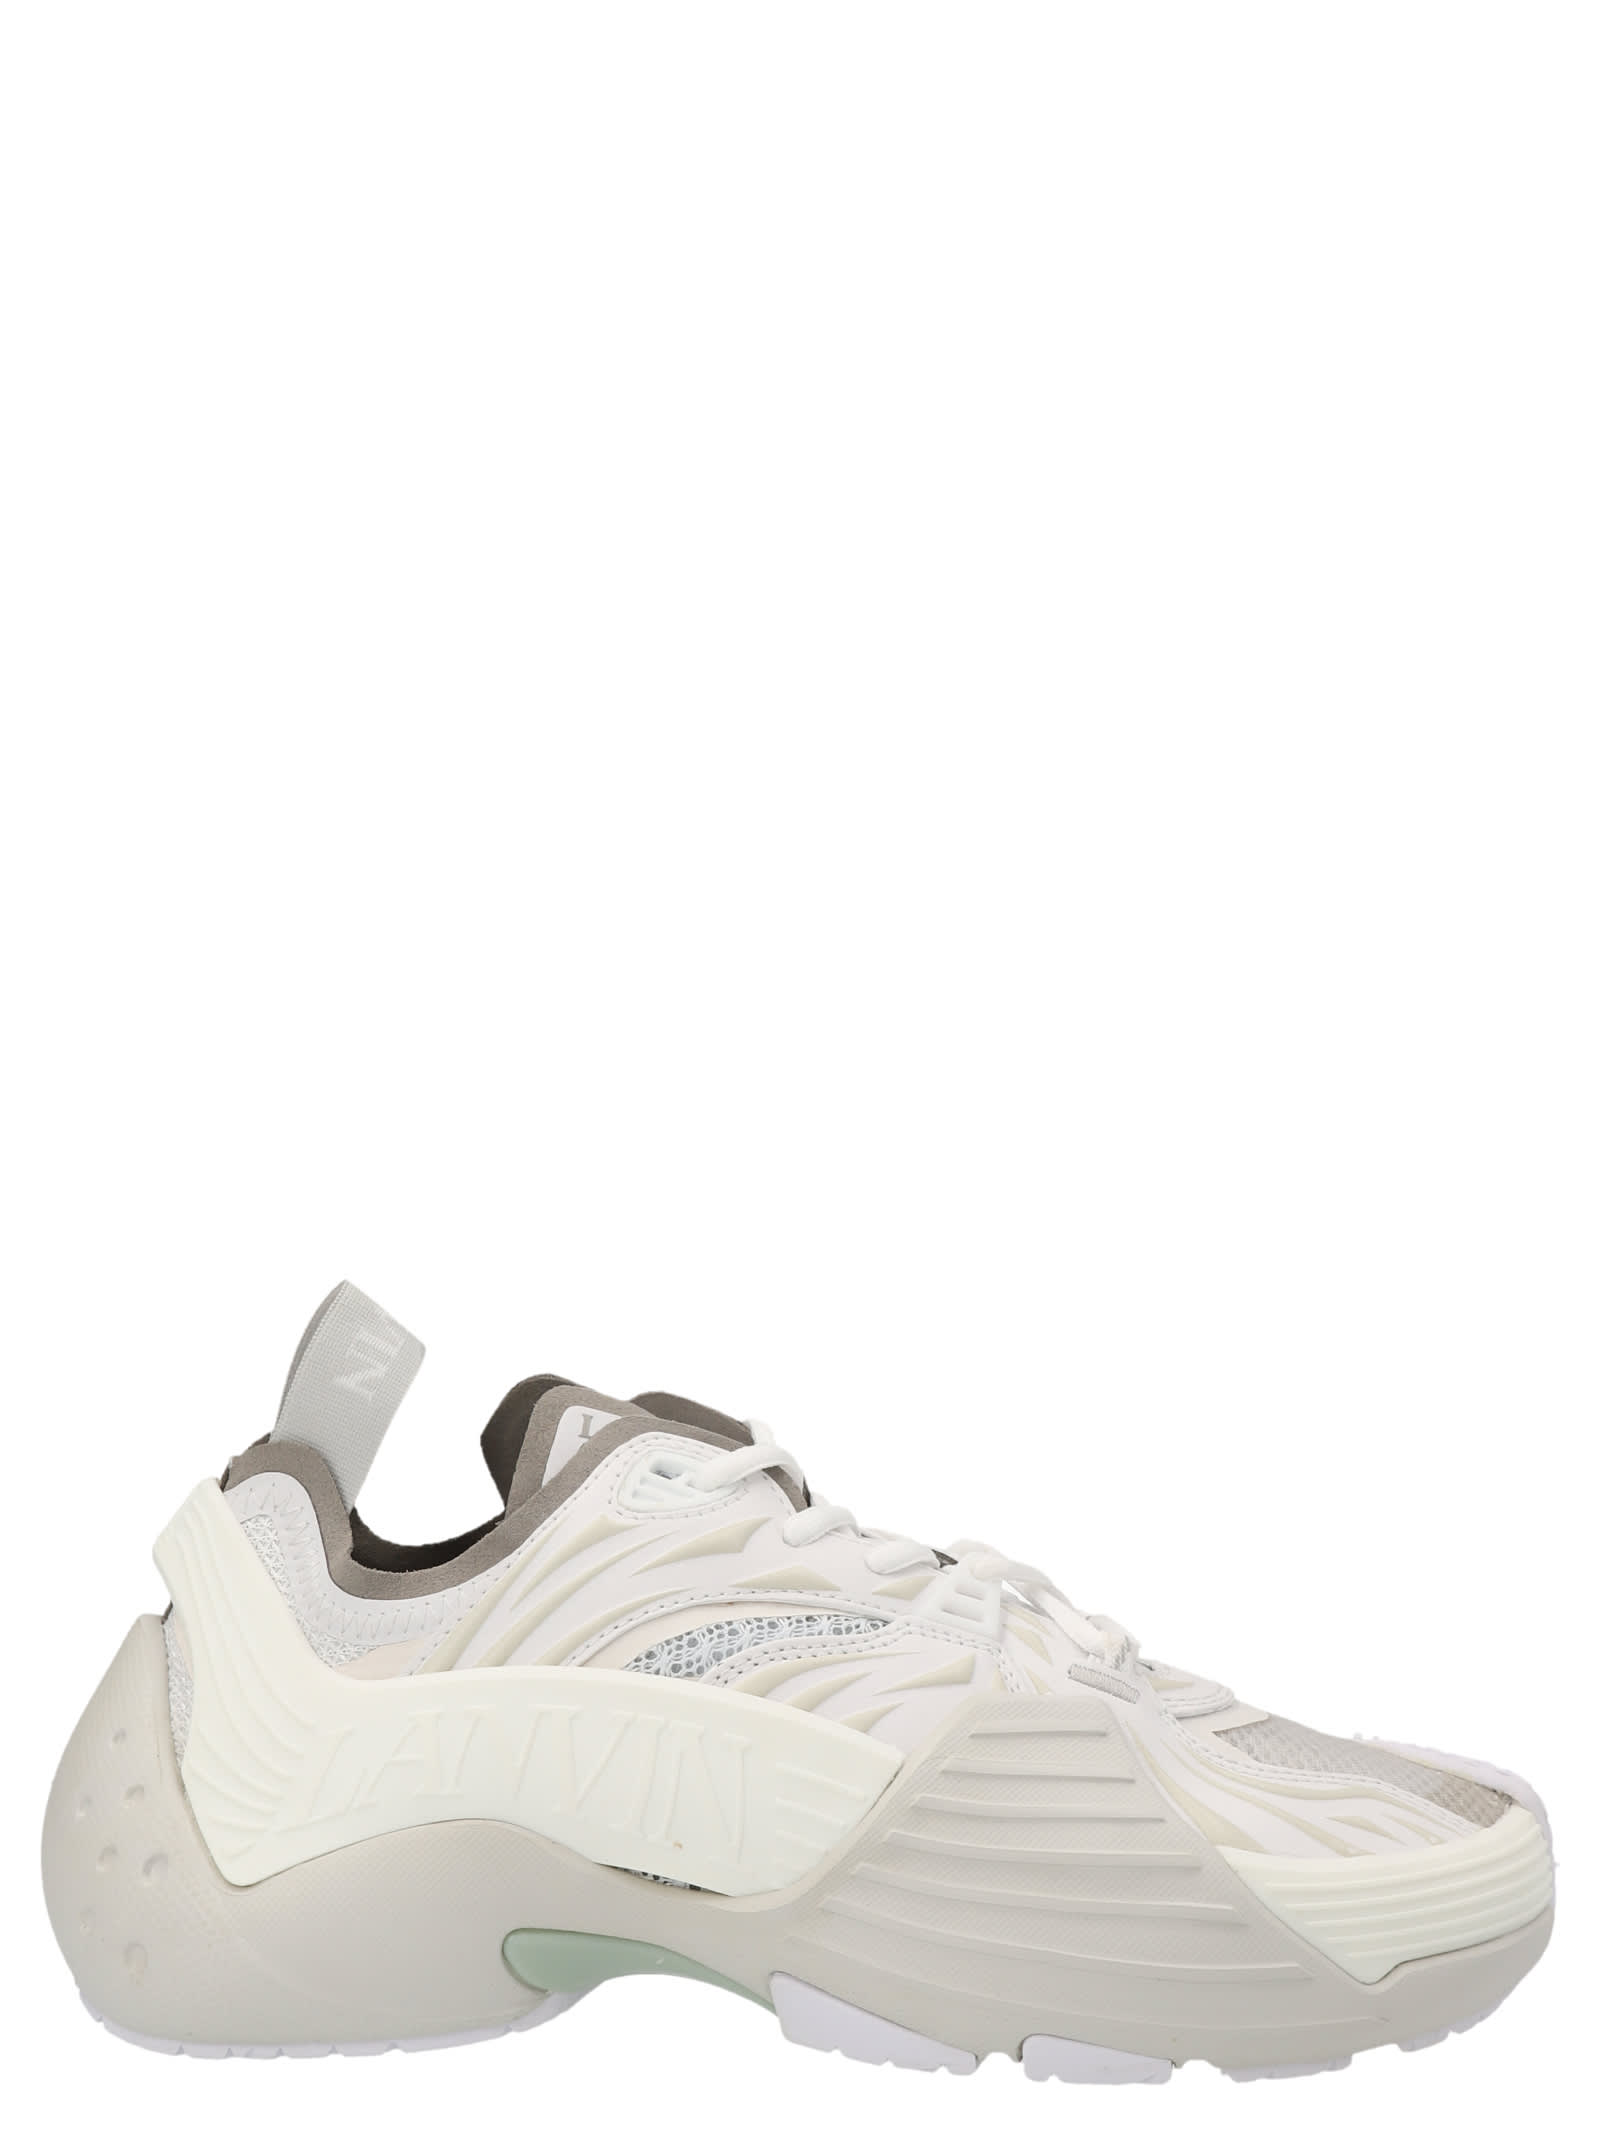 Lanvin Flash-x Sneakers In White